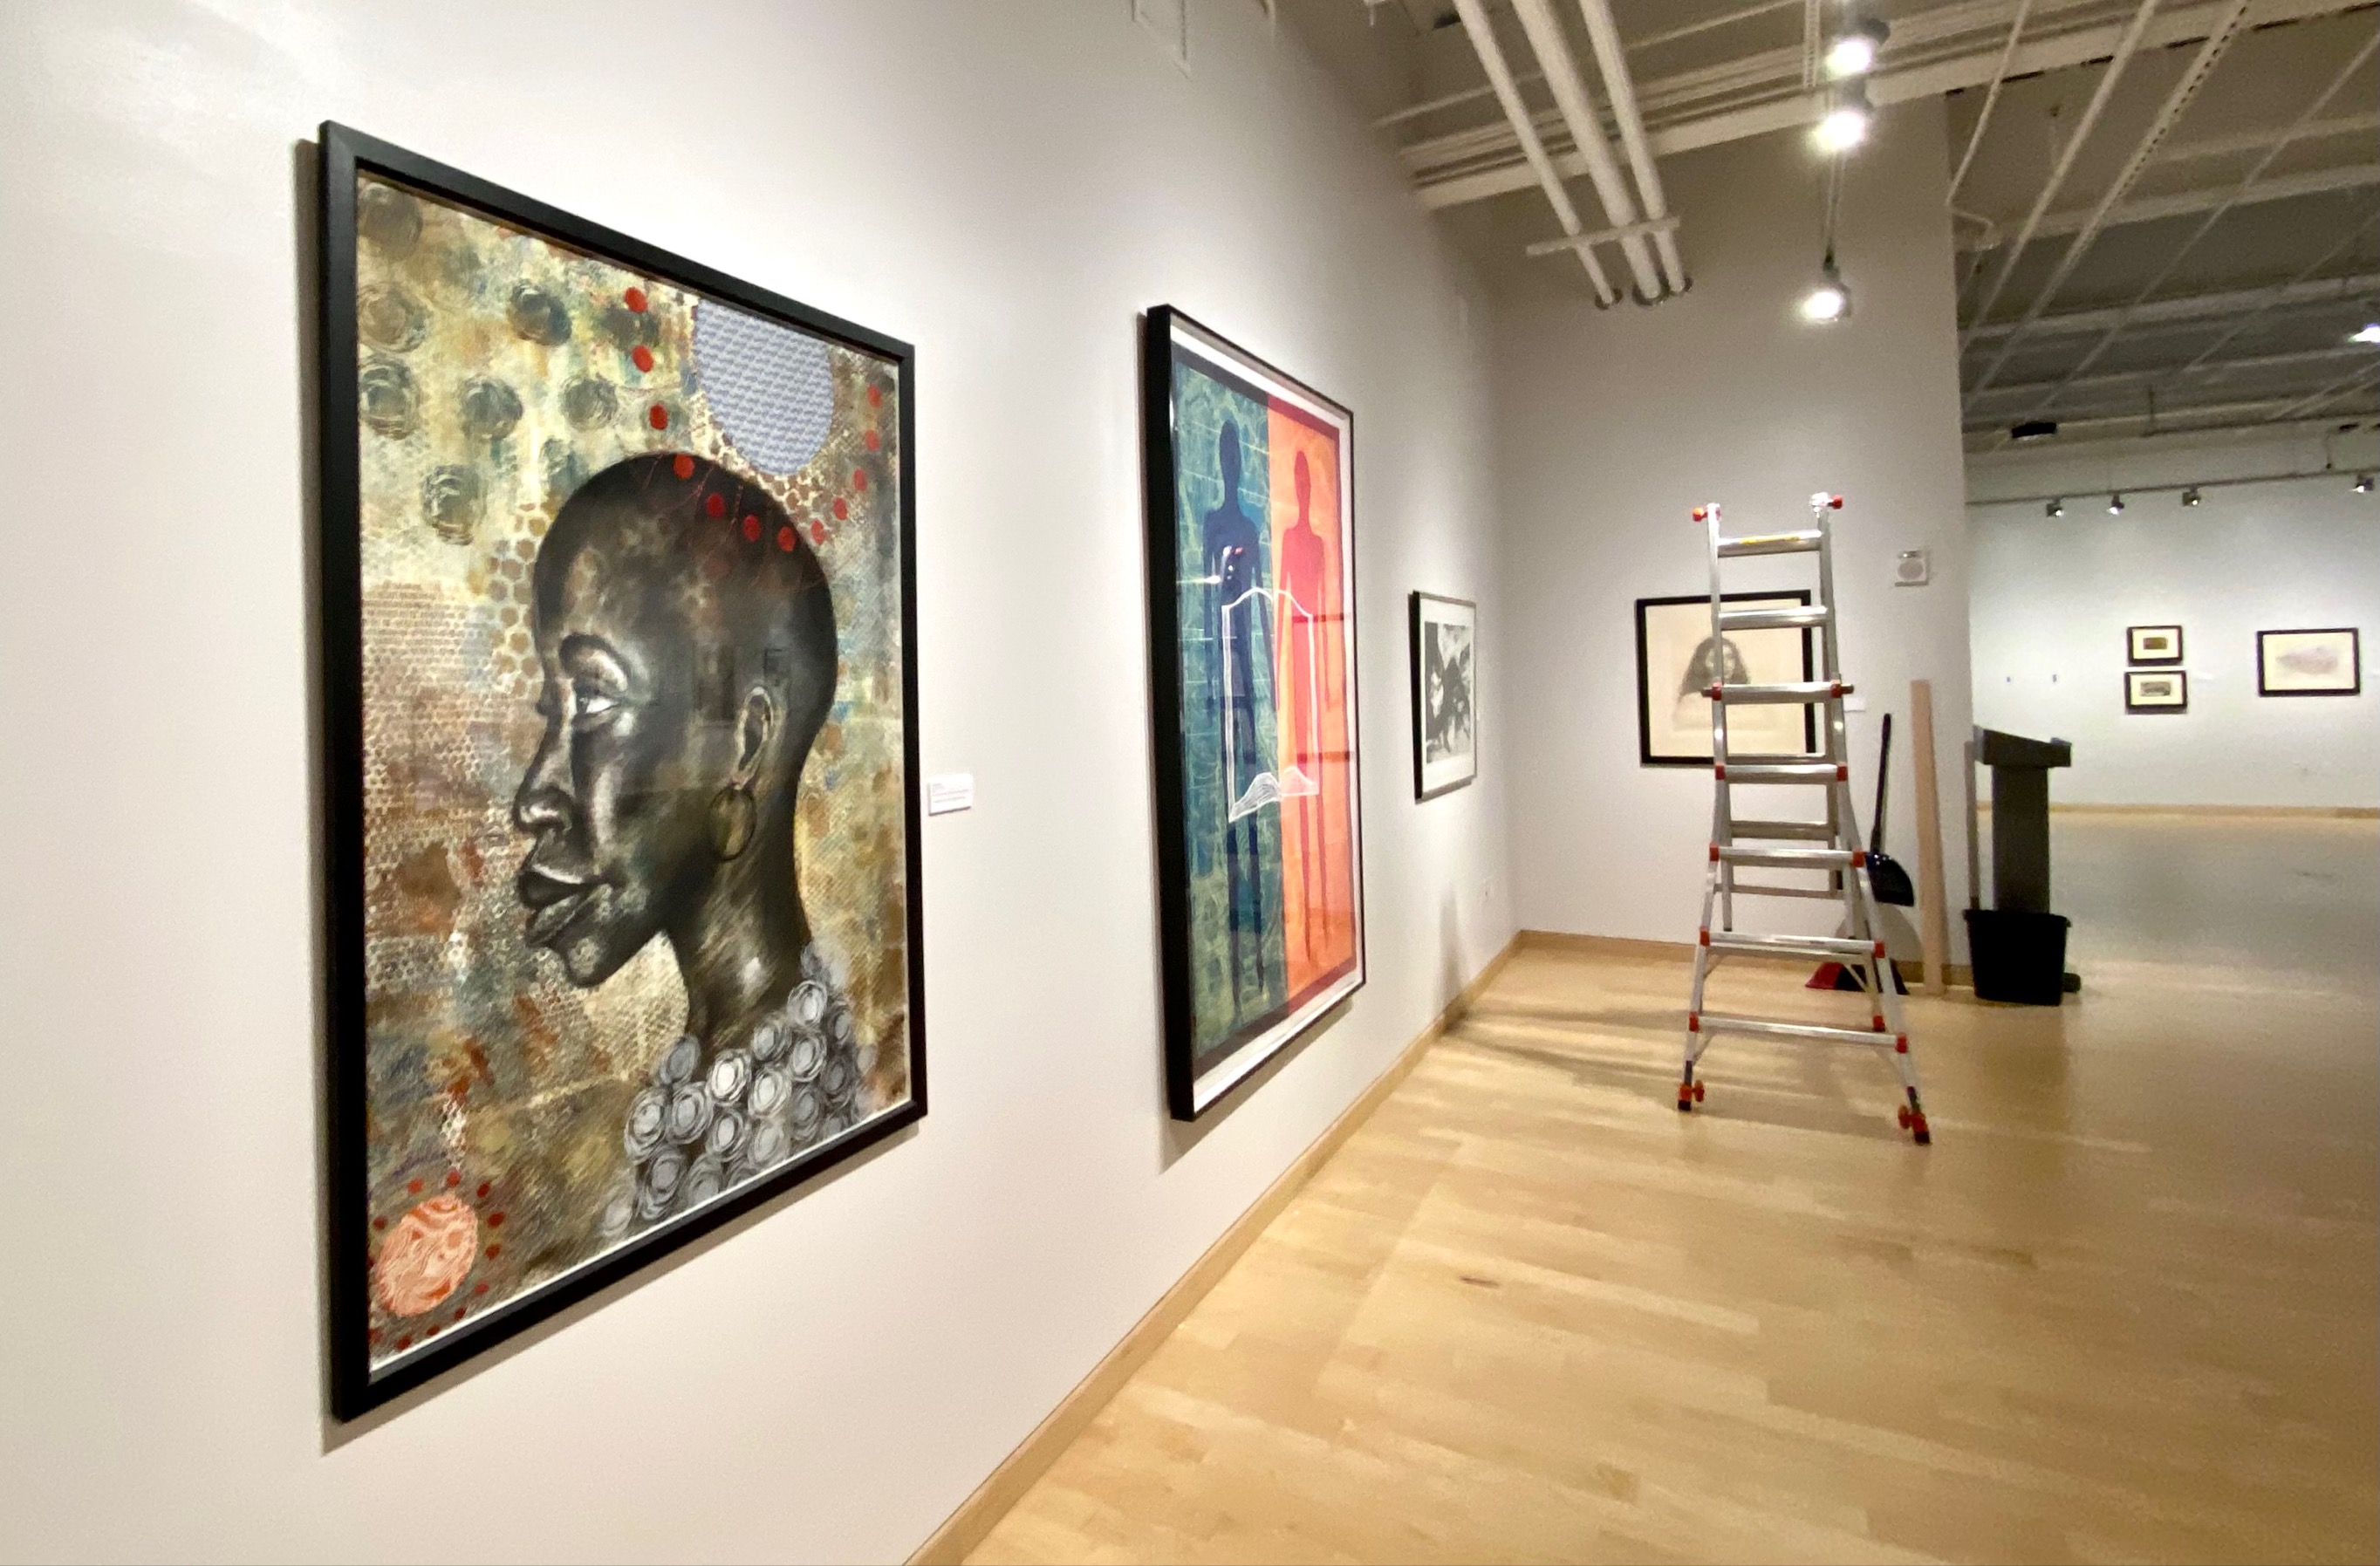 UAFS Gallery of Art & Design showcase 